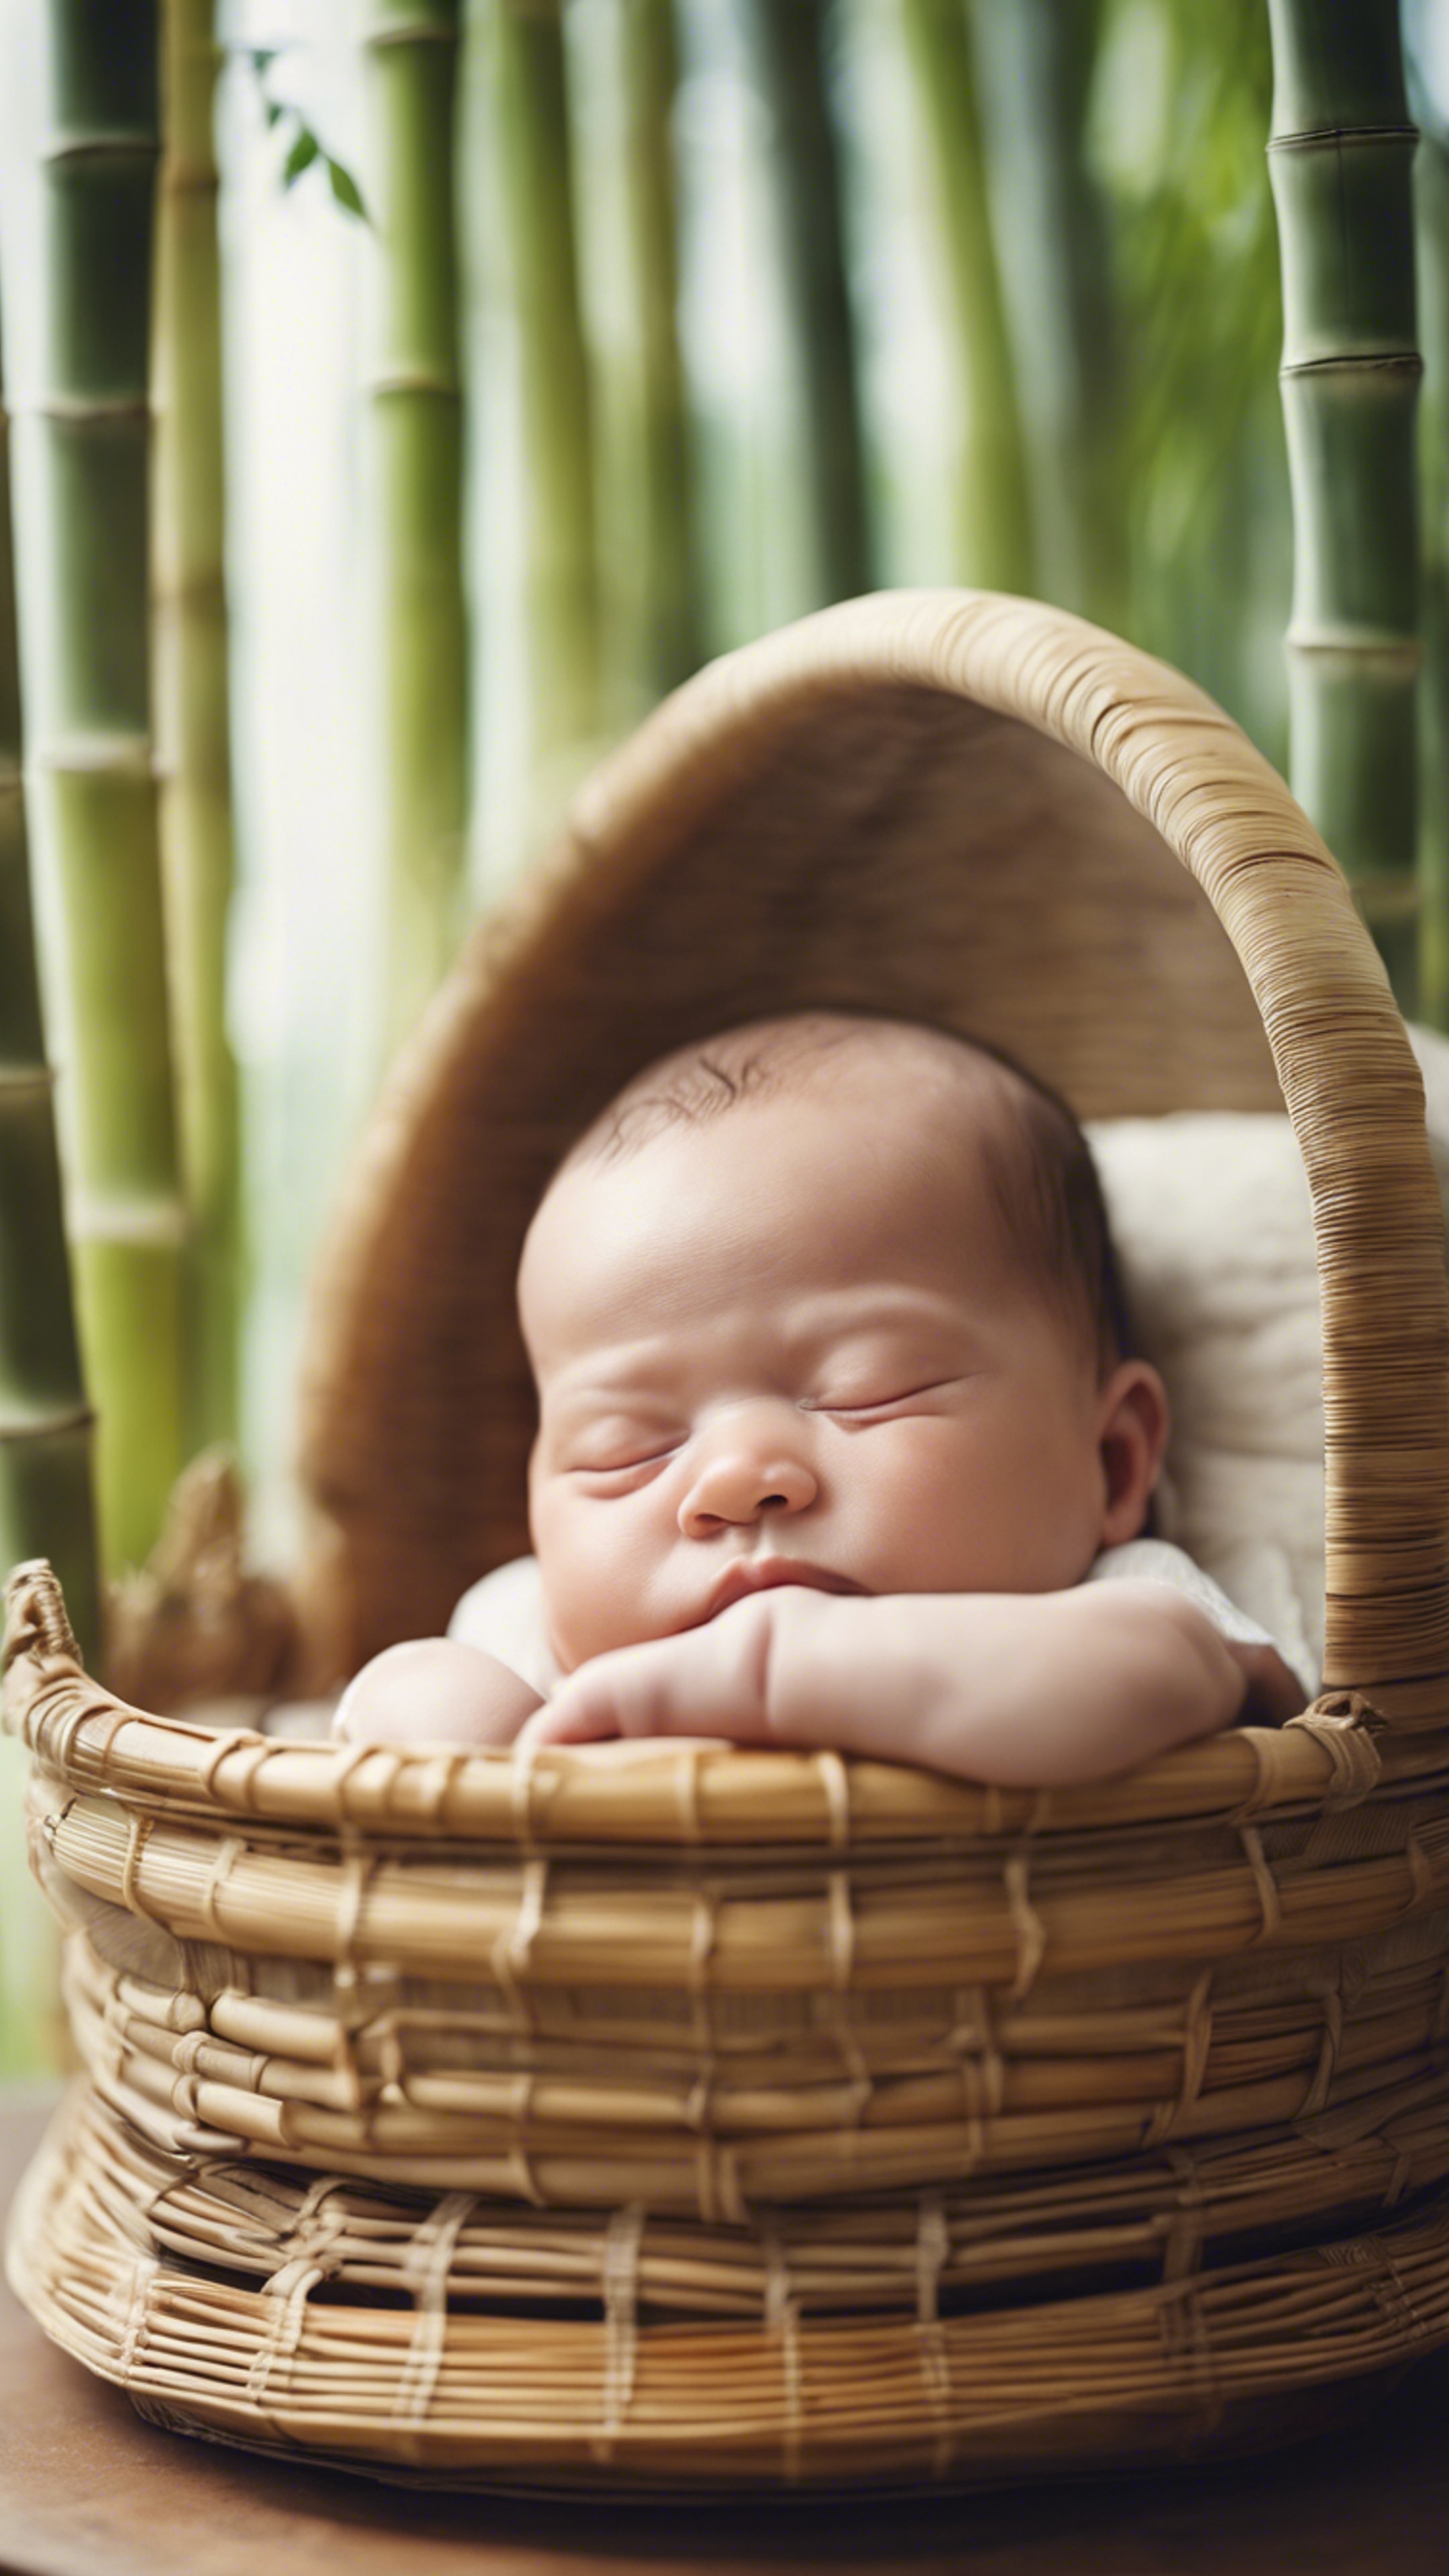 A newborn baby sleeping peacefully in a bamboo cradle. טפט[aa600c14ac9b4a439482]